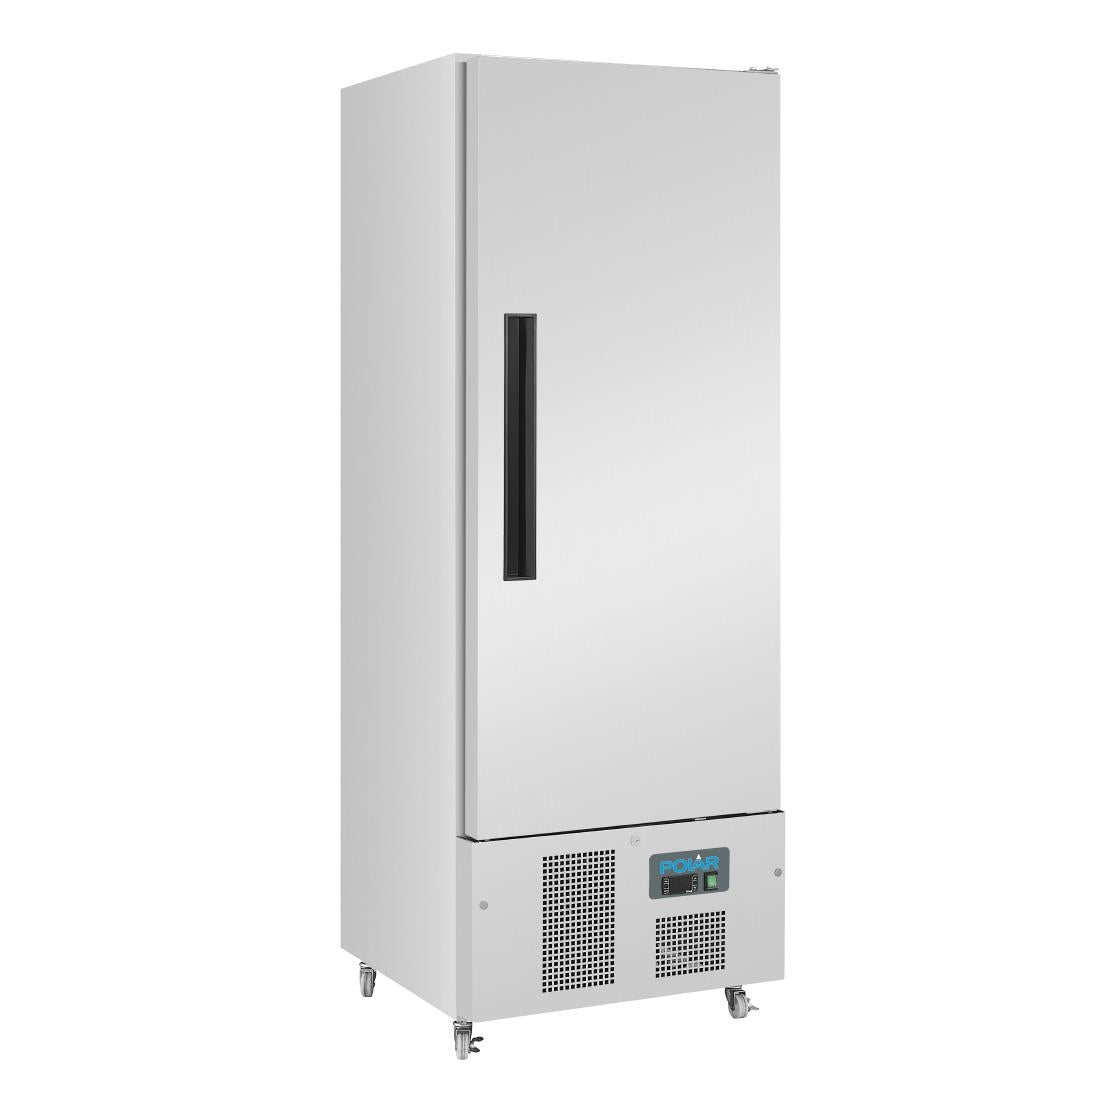 G591 Polar G-Series Upright Slimline Freezer 440Ltr JD Catering Equipment Solutions Ltd